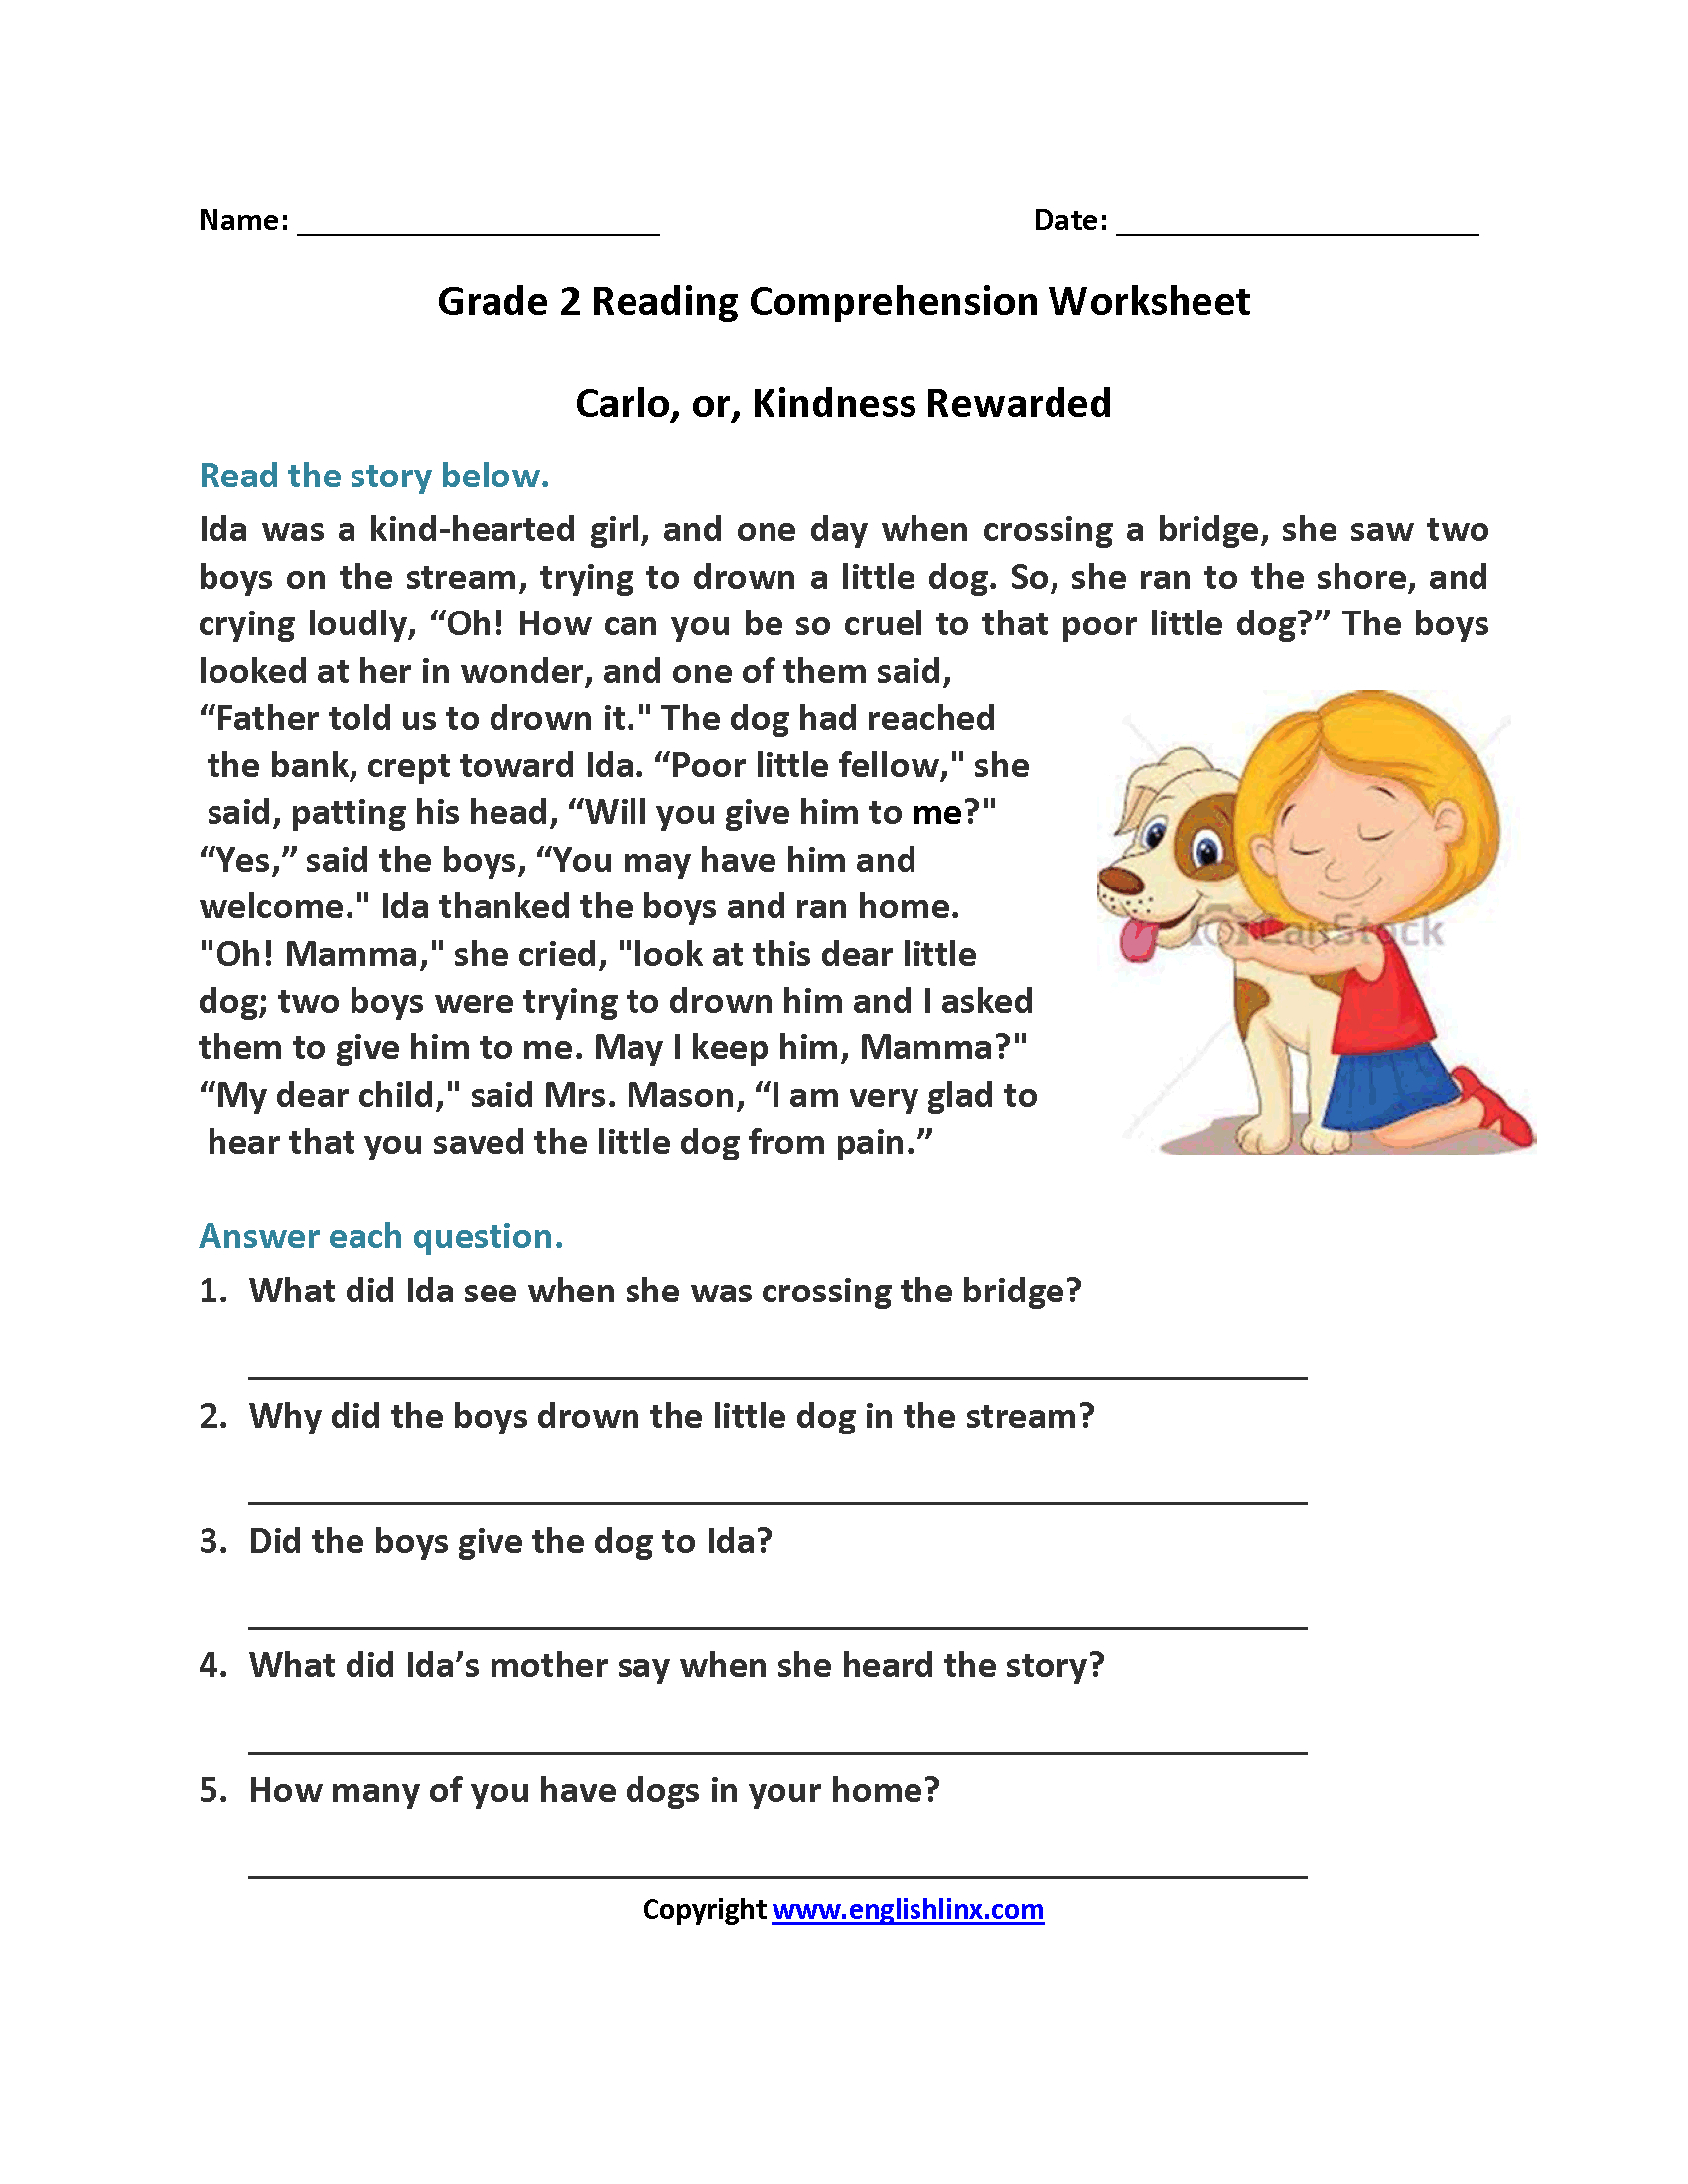 Carlo Or Kindness Rewarded Second Grade Reading Worksheets | Reading | Free Printable Comprehension Worksheets For Grade 5